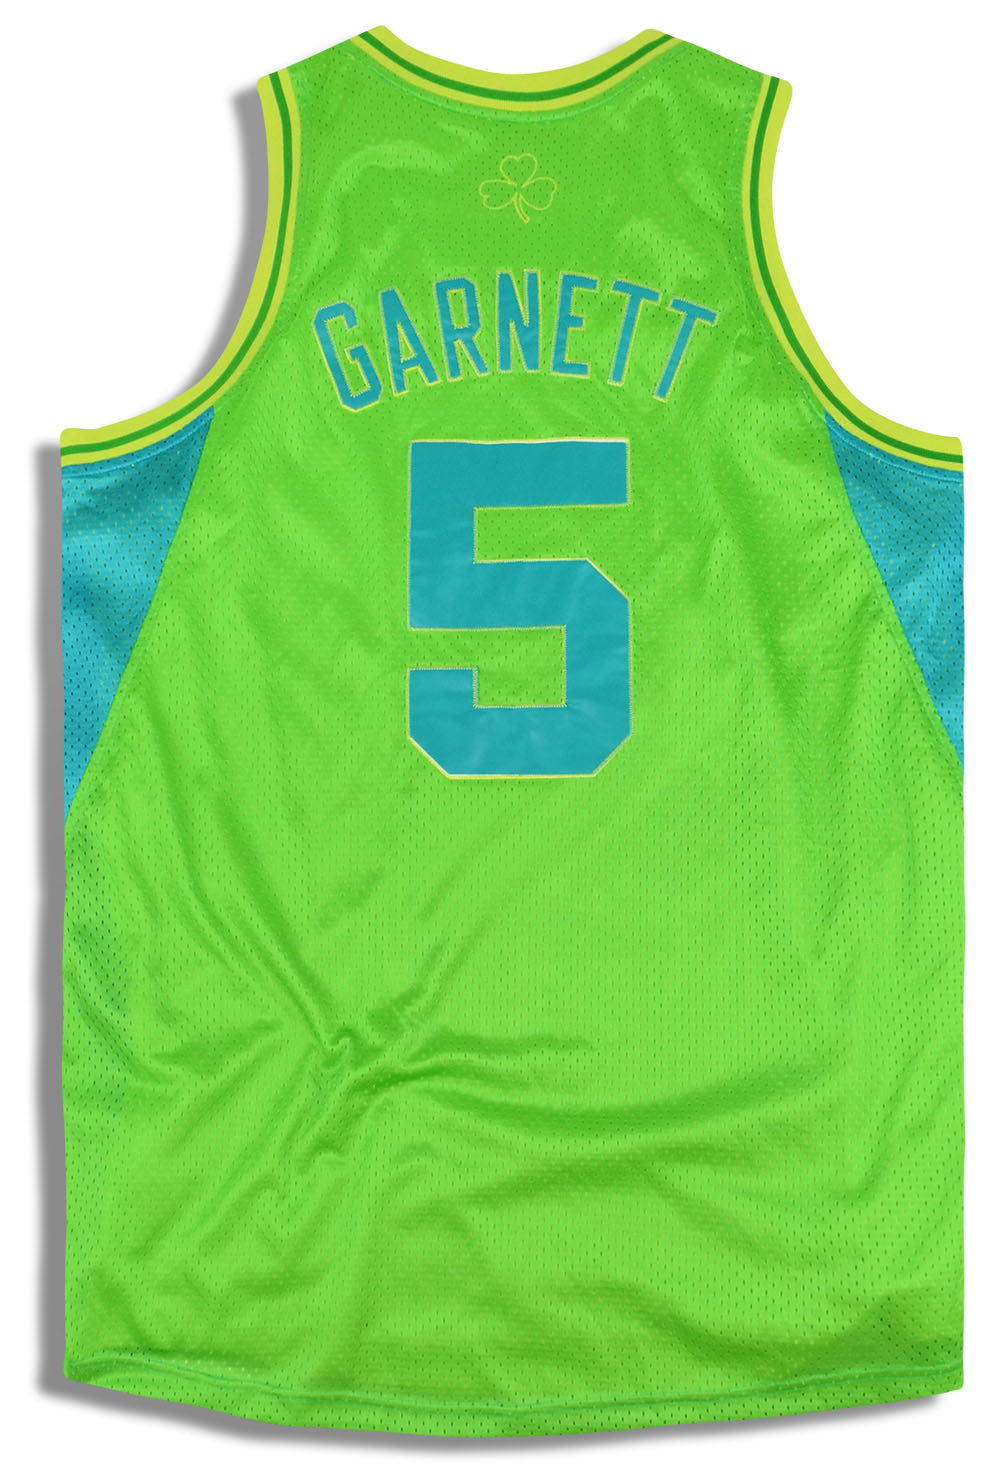 Kevin Garnett Throwback Timberwolves Jersey  Vintage Celtics Gear - Classic  American Sports